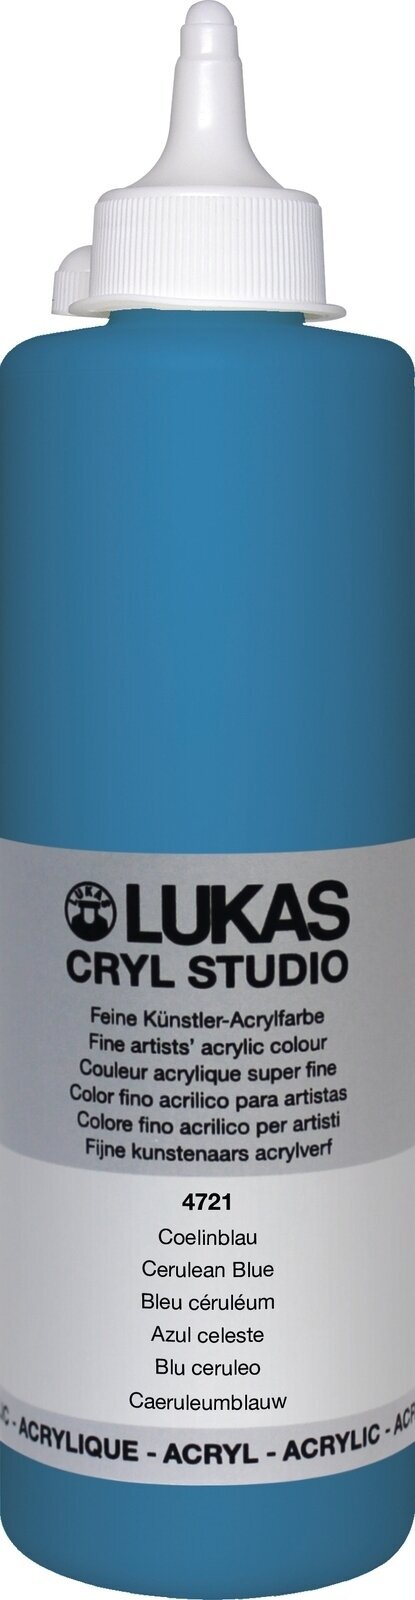 Colore acrilico Lukas Cryl Studio Acrylic Paint Plastic Bottle Colori acrilici Cerulean Blue 500 ml 1 pz